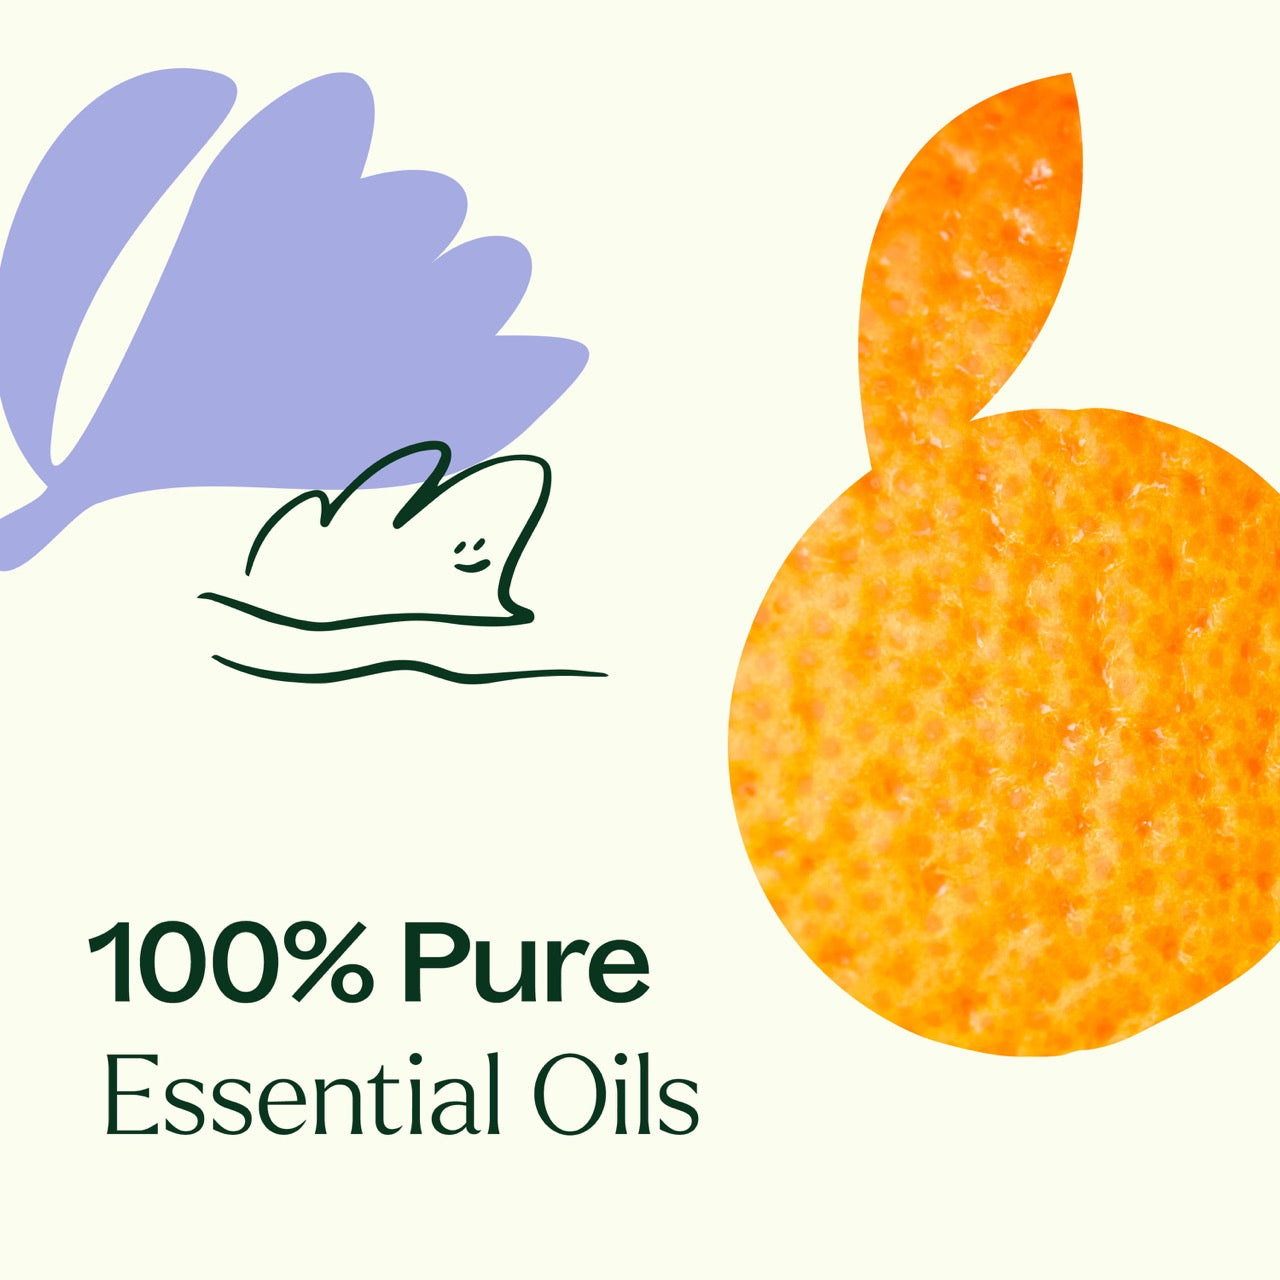 100% pure essential oils in Calming the Child KidSafe Essential Oil